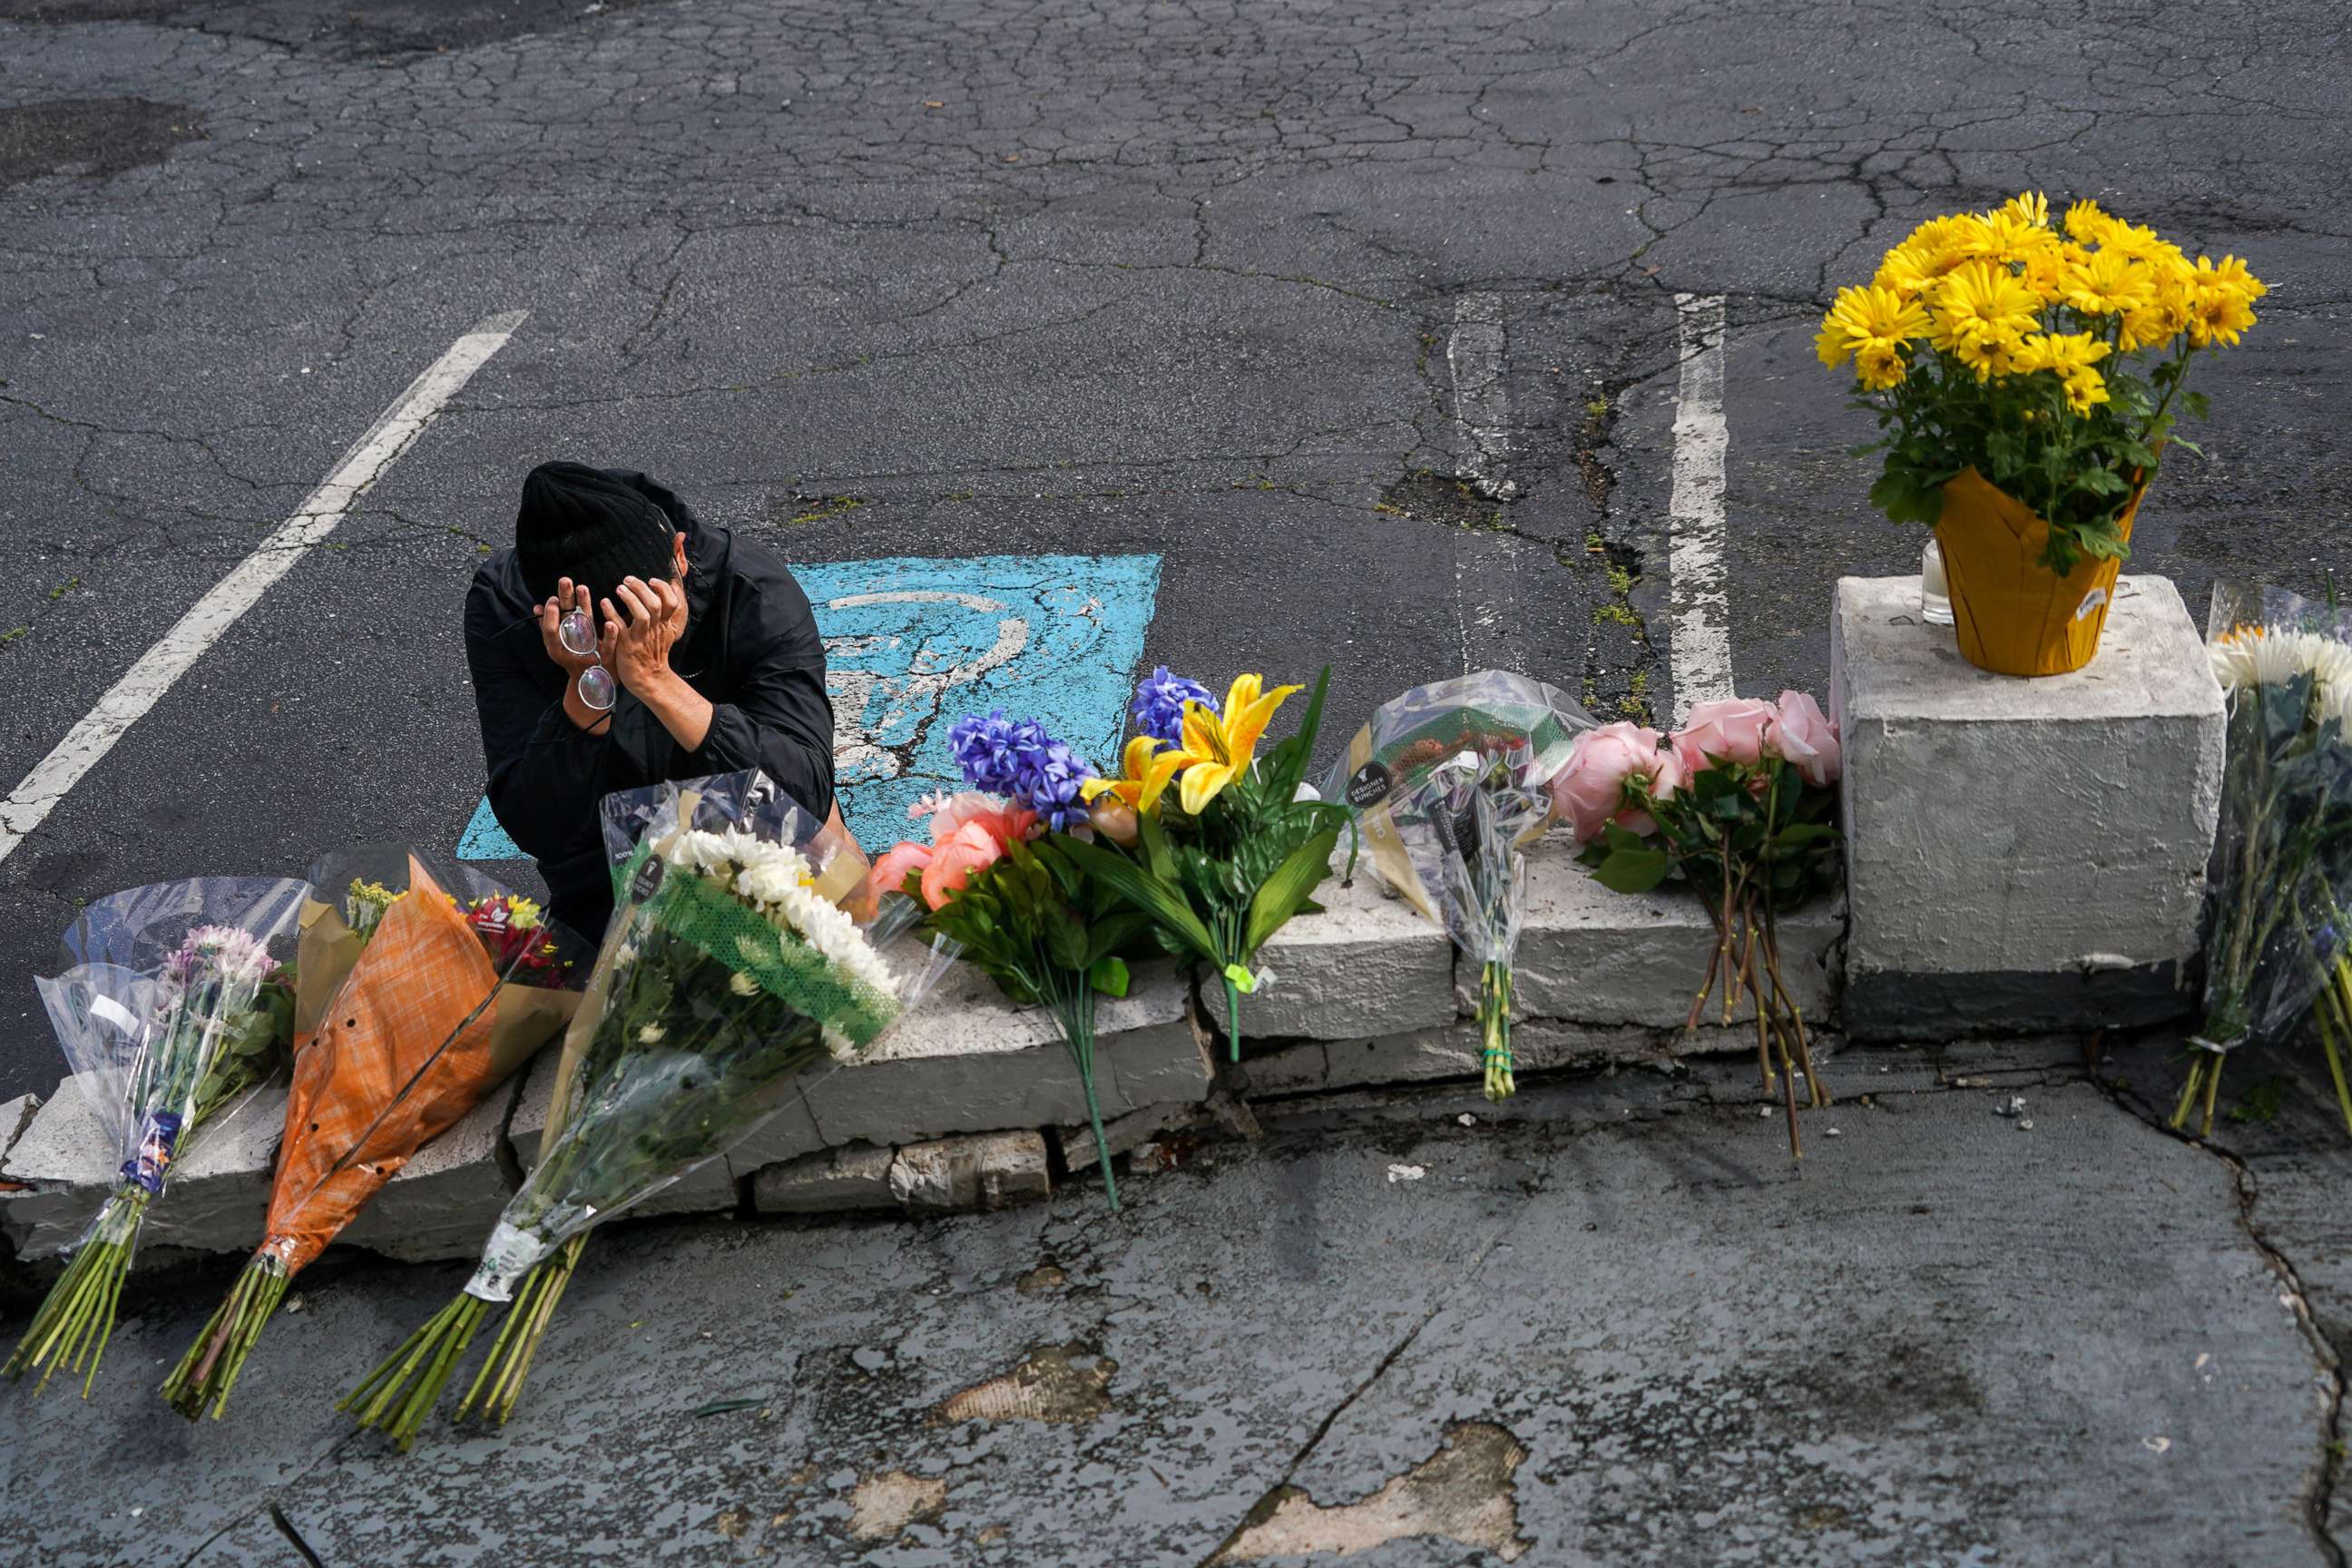 PHOTO: Woojin Kang, 27, cries at the makeshift memorial outside Gold Spa near Acworth, Ga., on March 18, 2021.